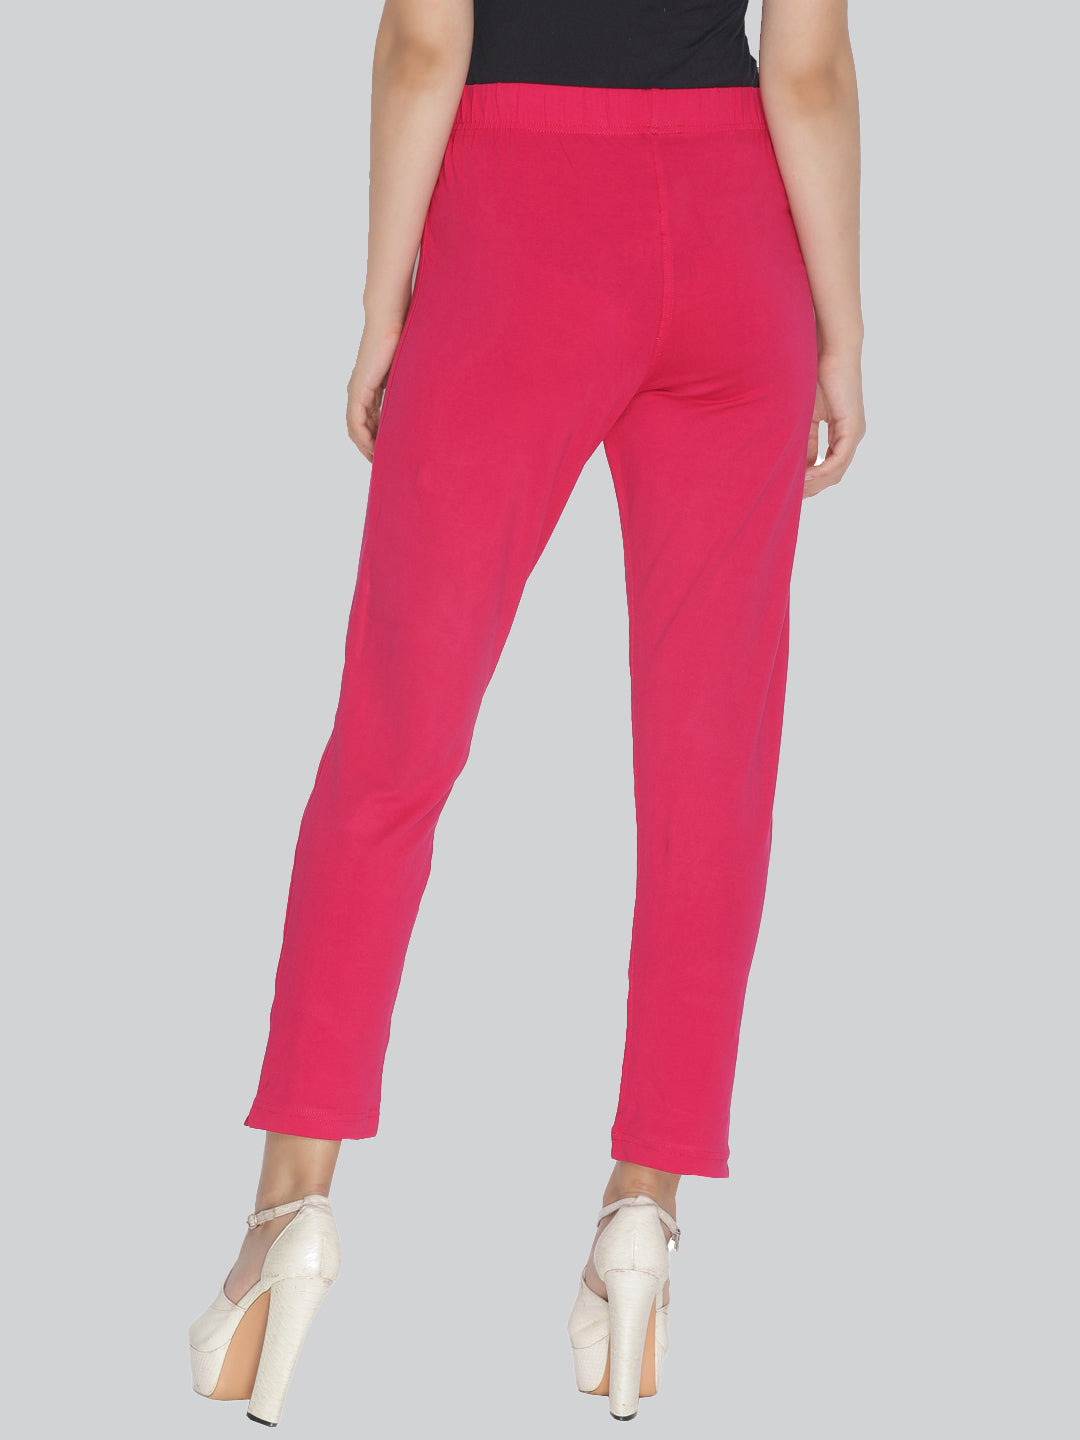 Buy Flickz Narrow Ankle PantCasual PantOfficial Pant Pant for  LadiesGirlWomen Pink34 at Amazonin